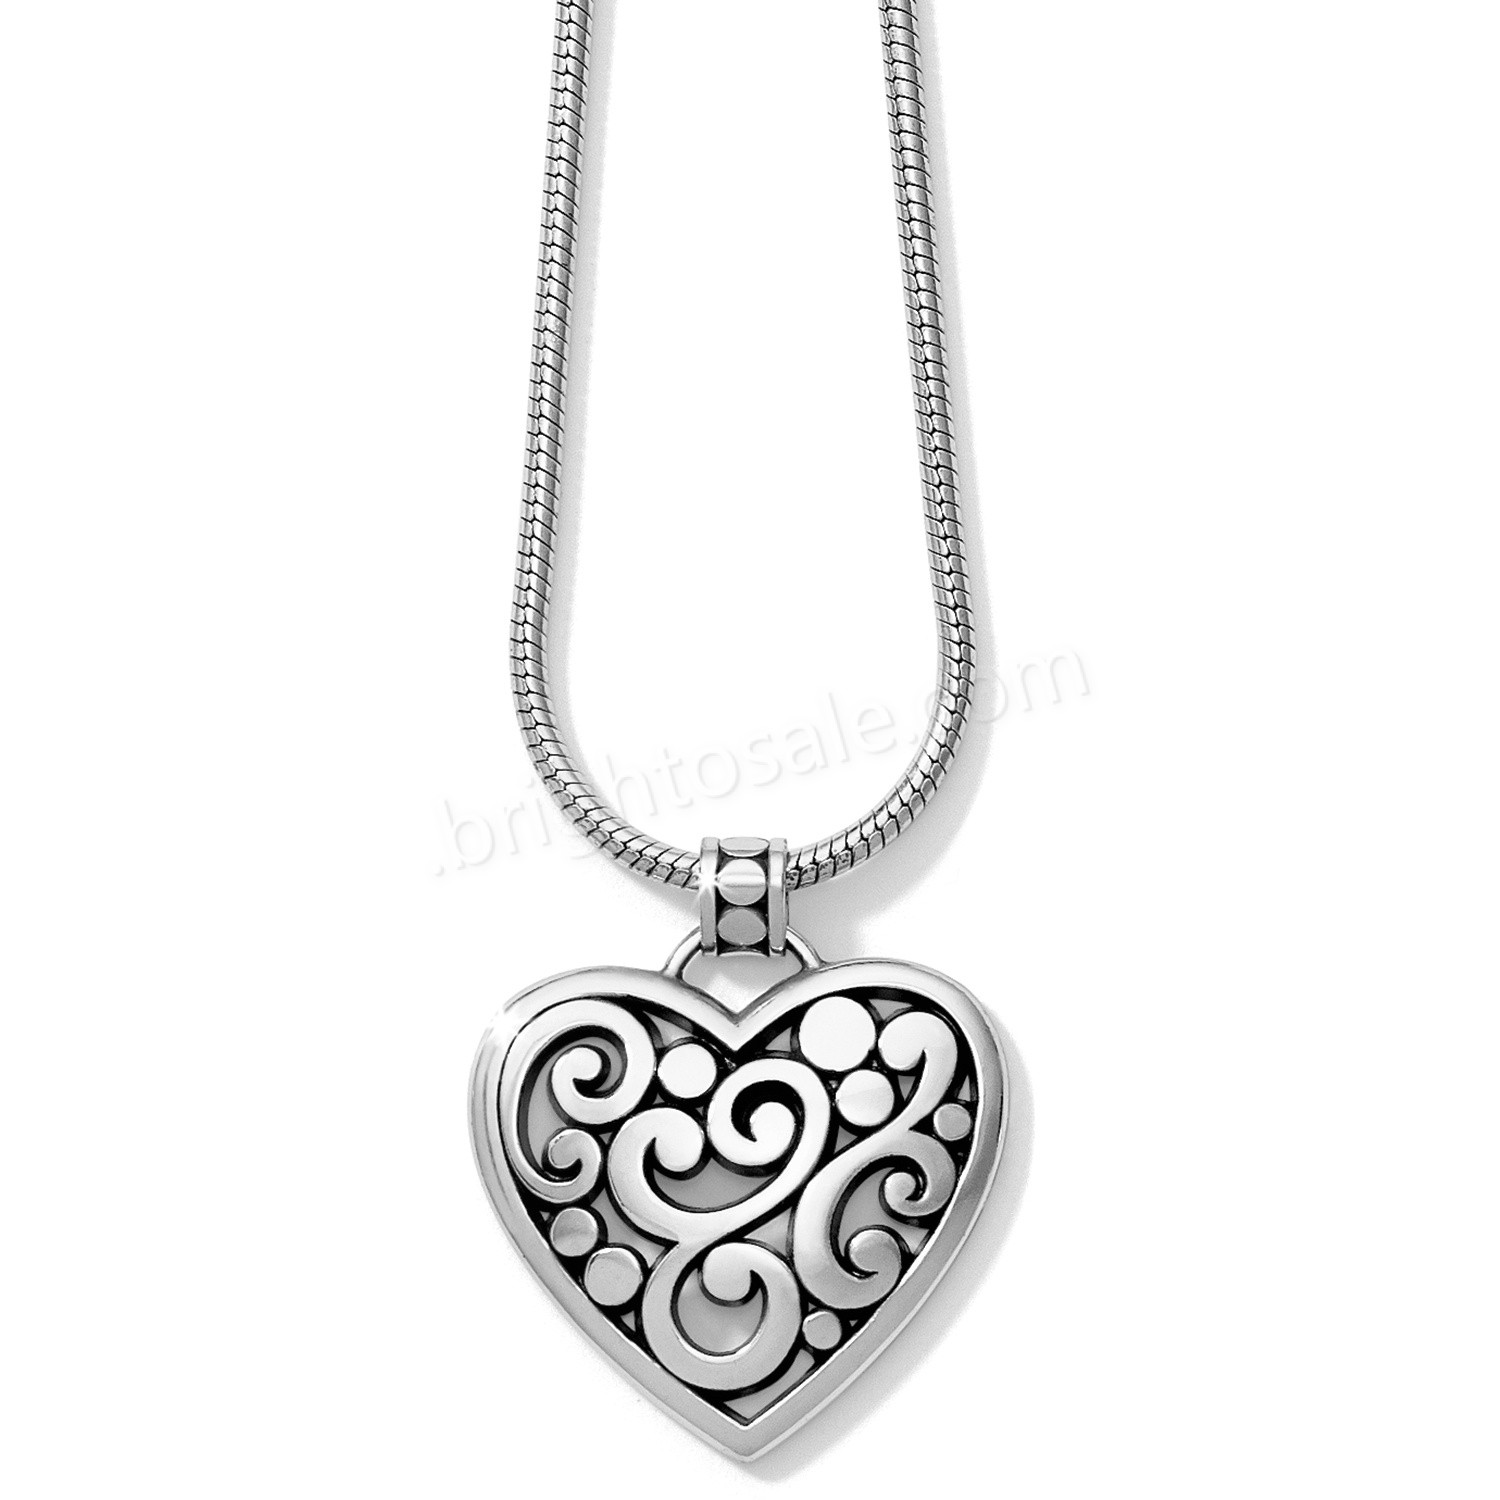 Brighton Collectibles & Online Discount Contempo Heart Necklace - Brighton Collectibles & Online Discount Contempo Heart Necklace